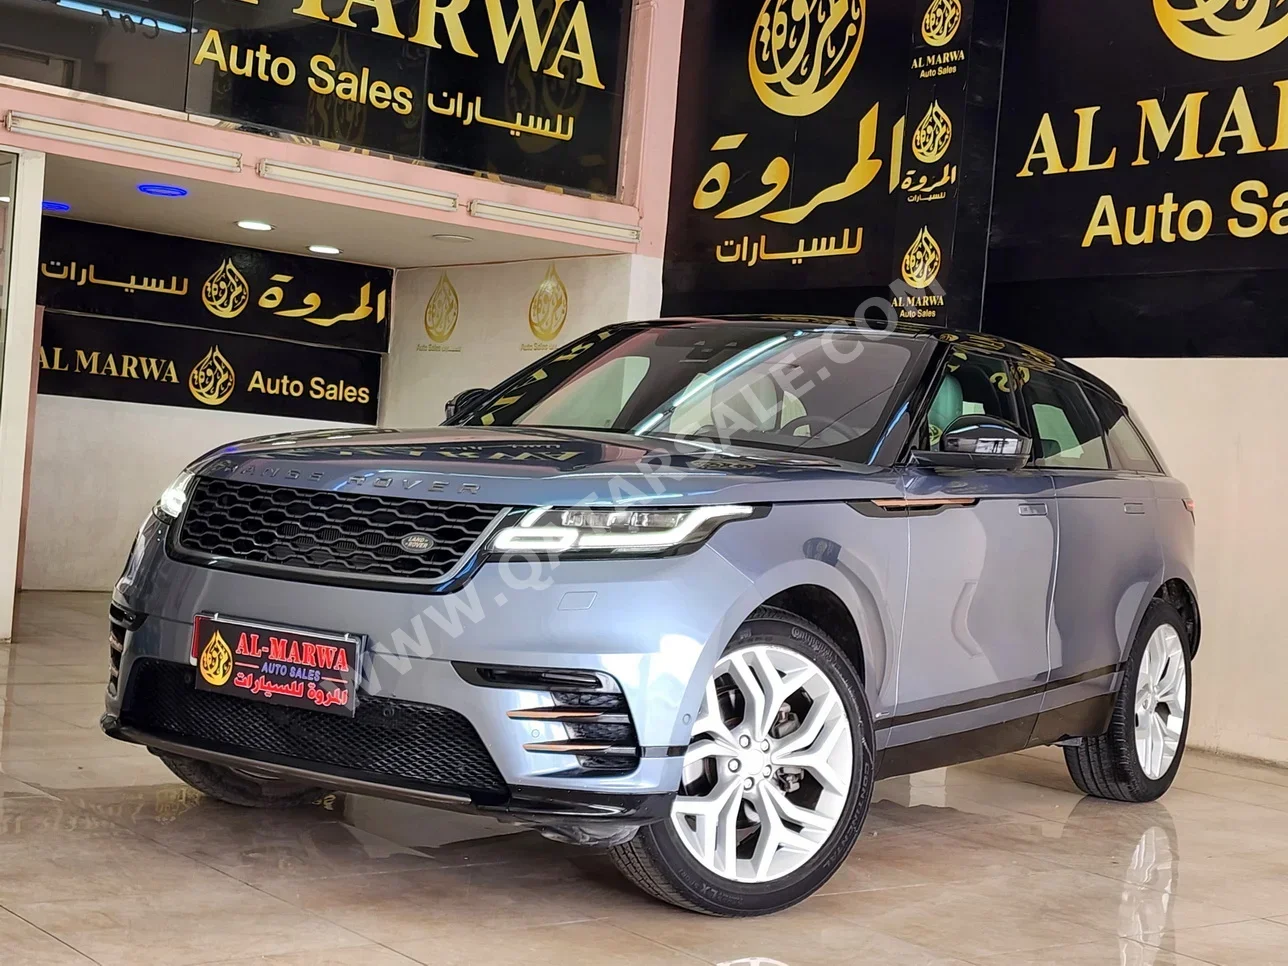 Land Rover  Range Rover  Velar R-Dynamic  2018  Automatic  16,000 Km  6 Cylinder  Four Wheel Drive (4WD)  SUV  Blue